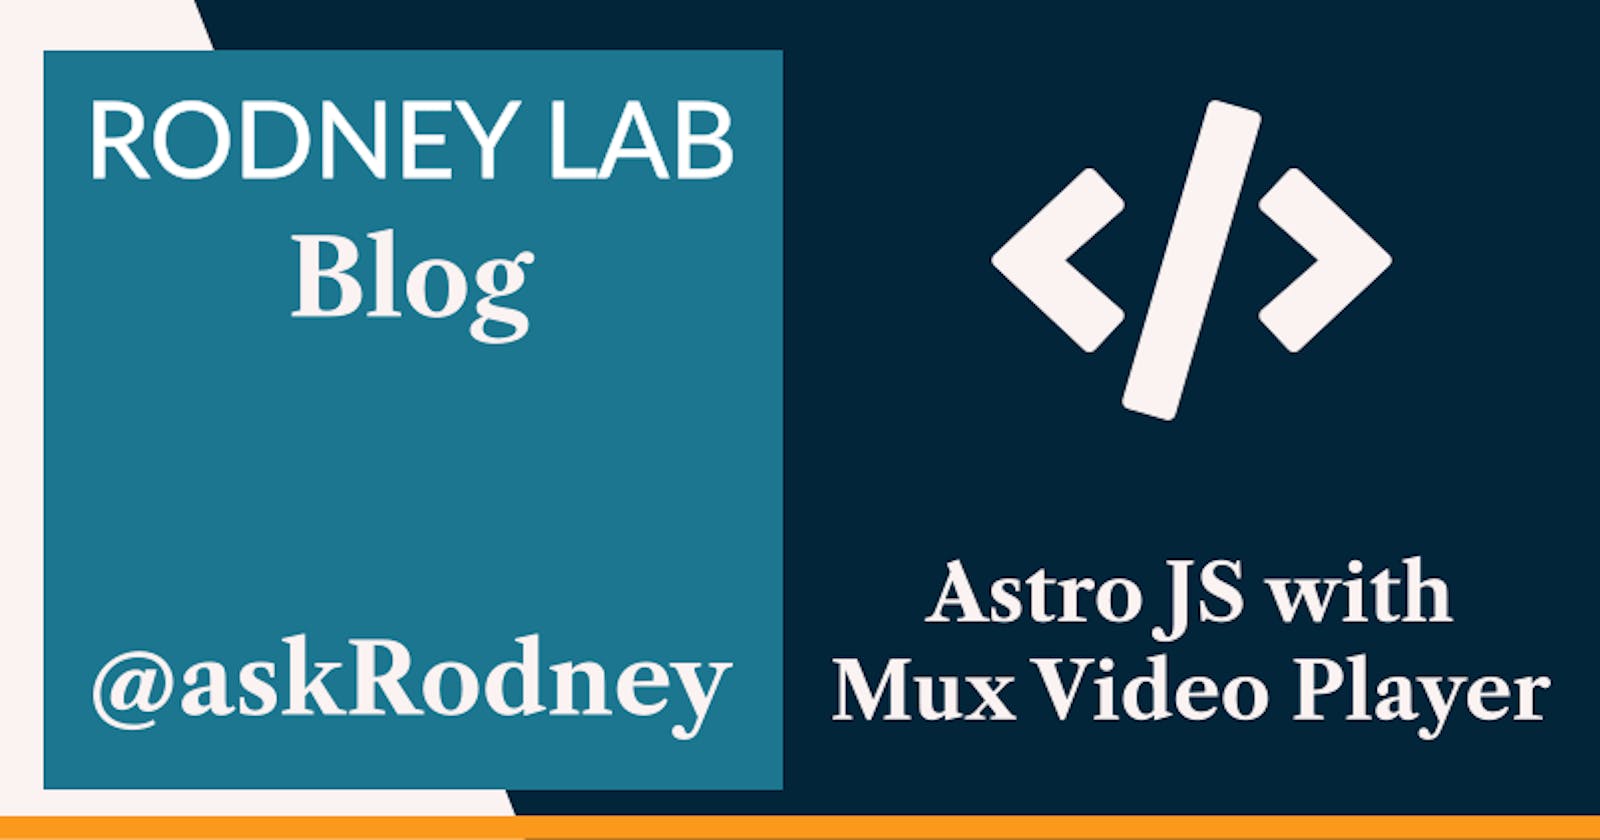 Astro JS Mux Video